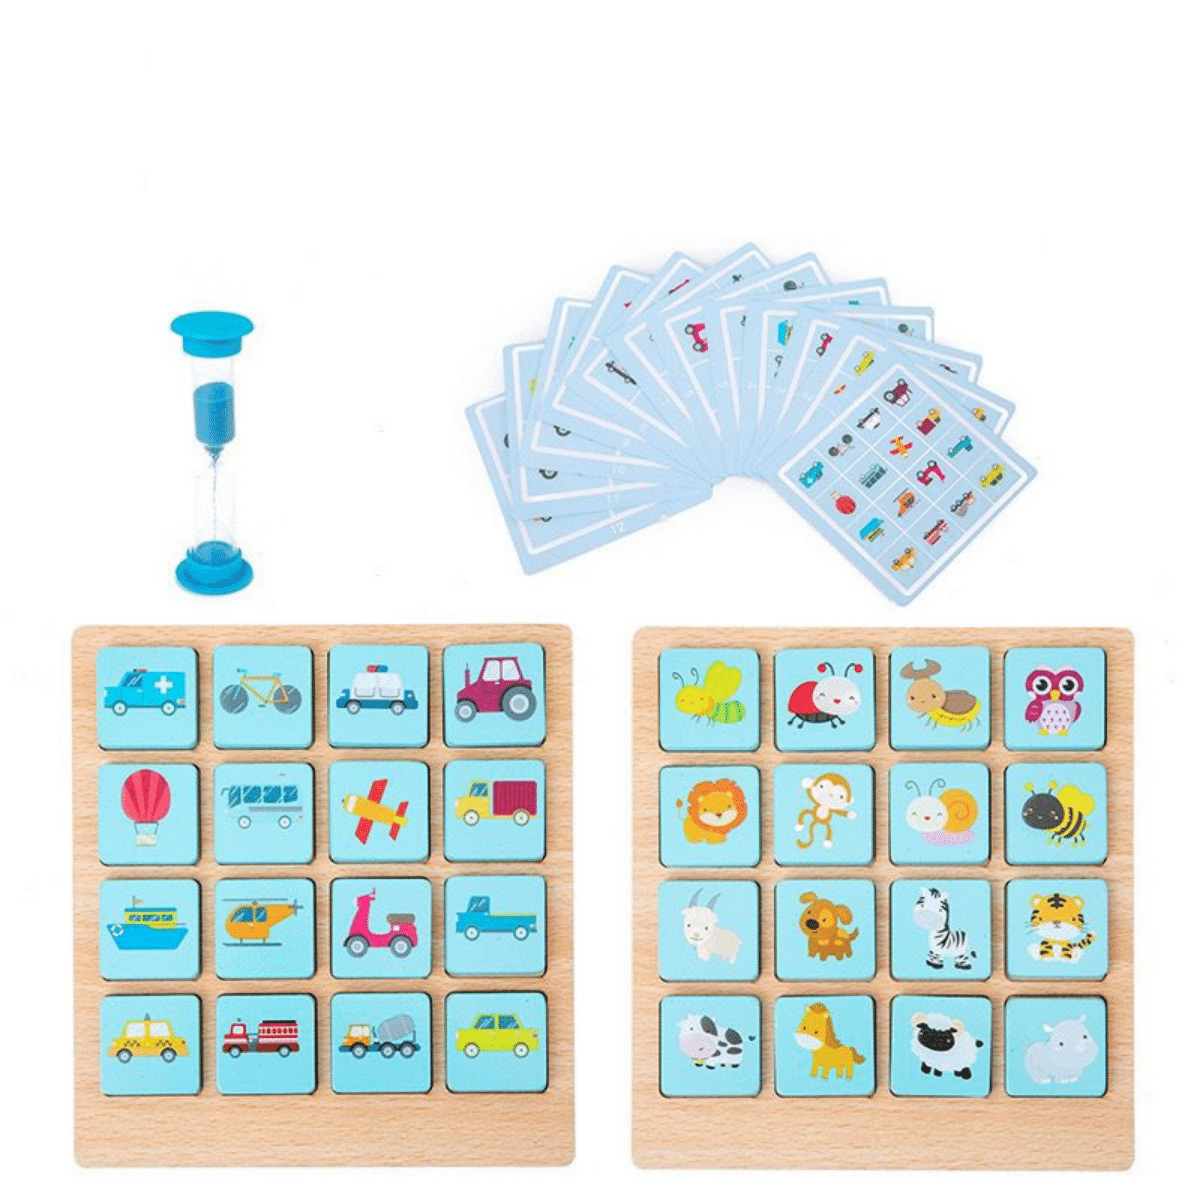 Memory Card Game™ | Braintrainer for de små - Puslespil